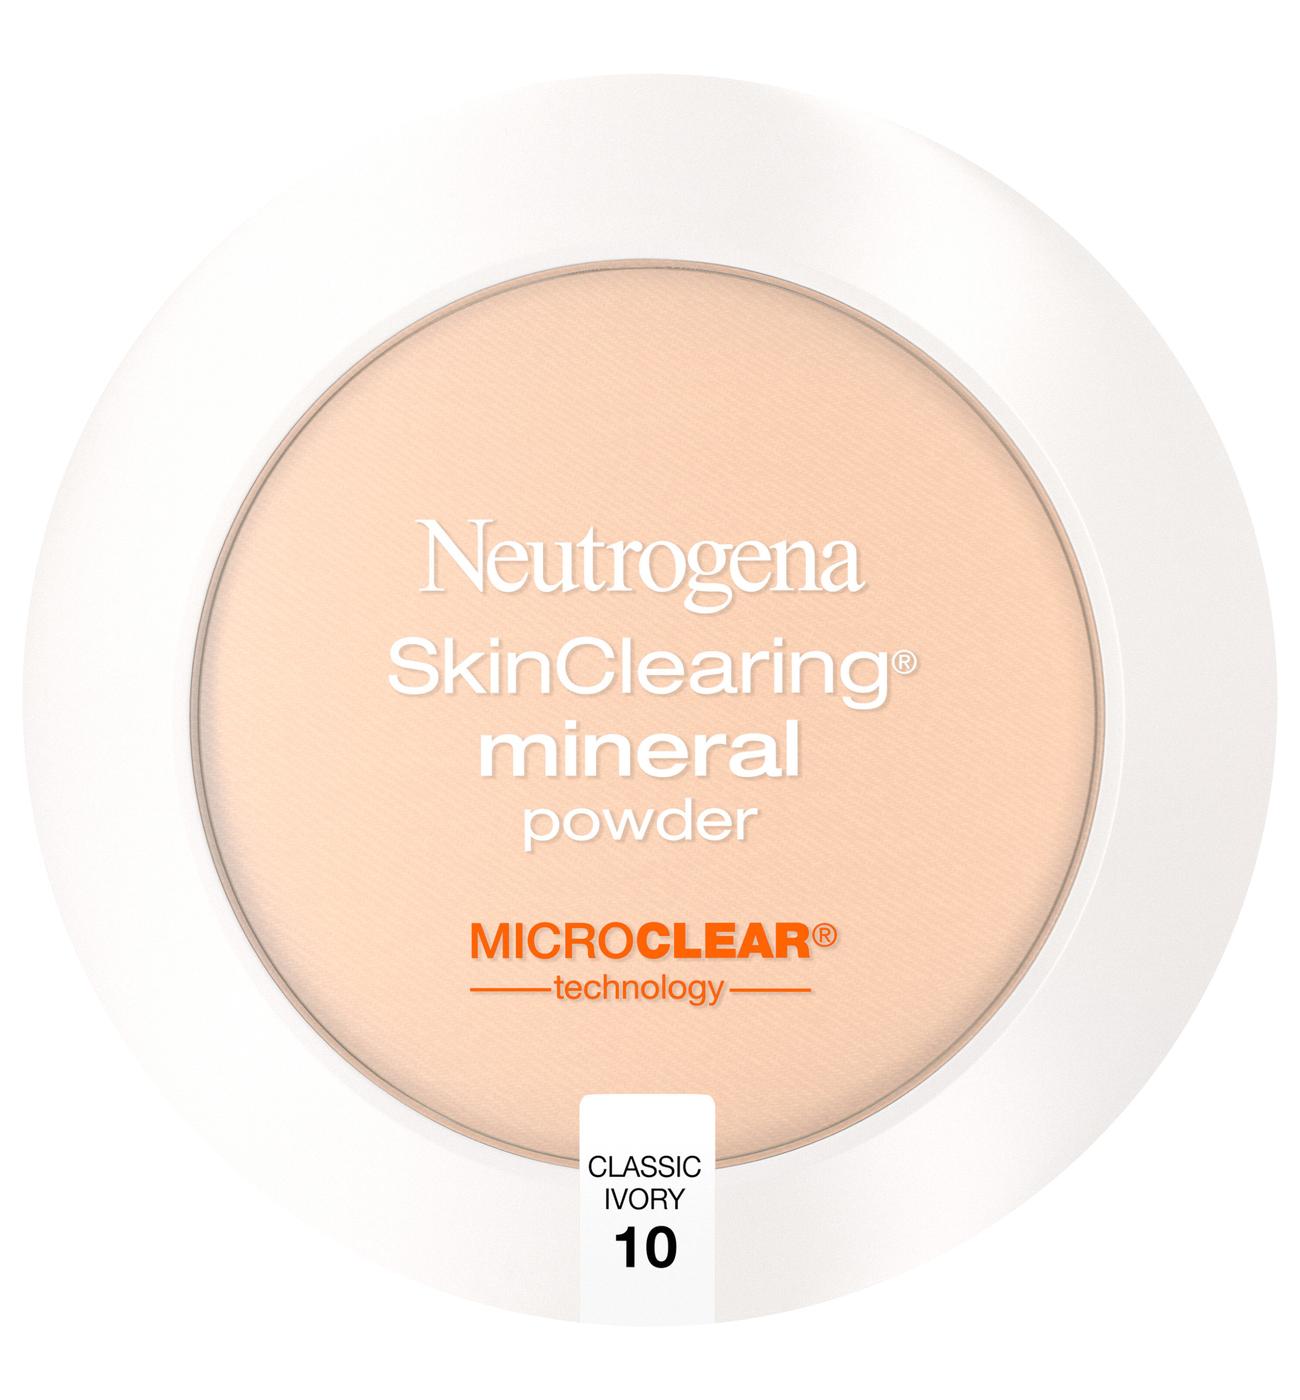 Neutrogena Skinclearing Mineral Powder - 10 Classic Ivory; image 1 of 5